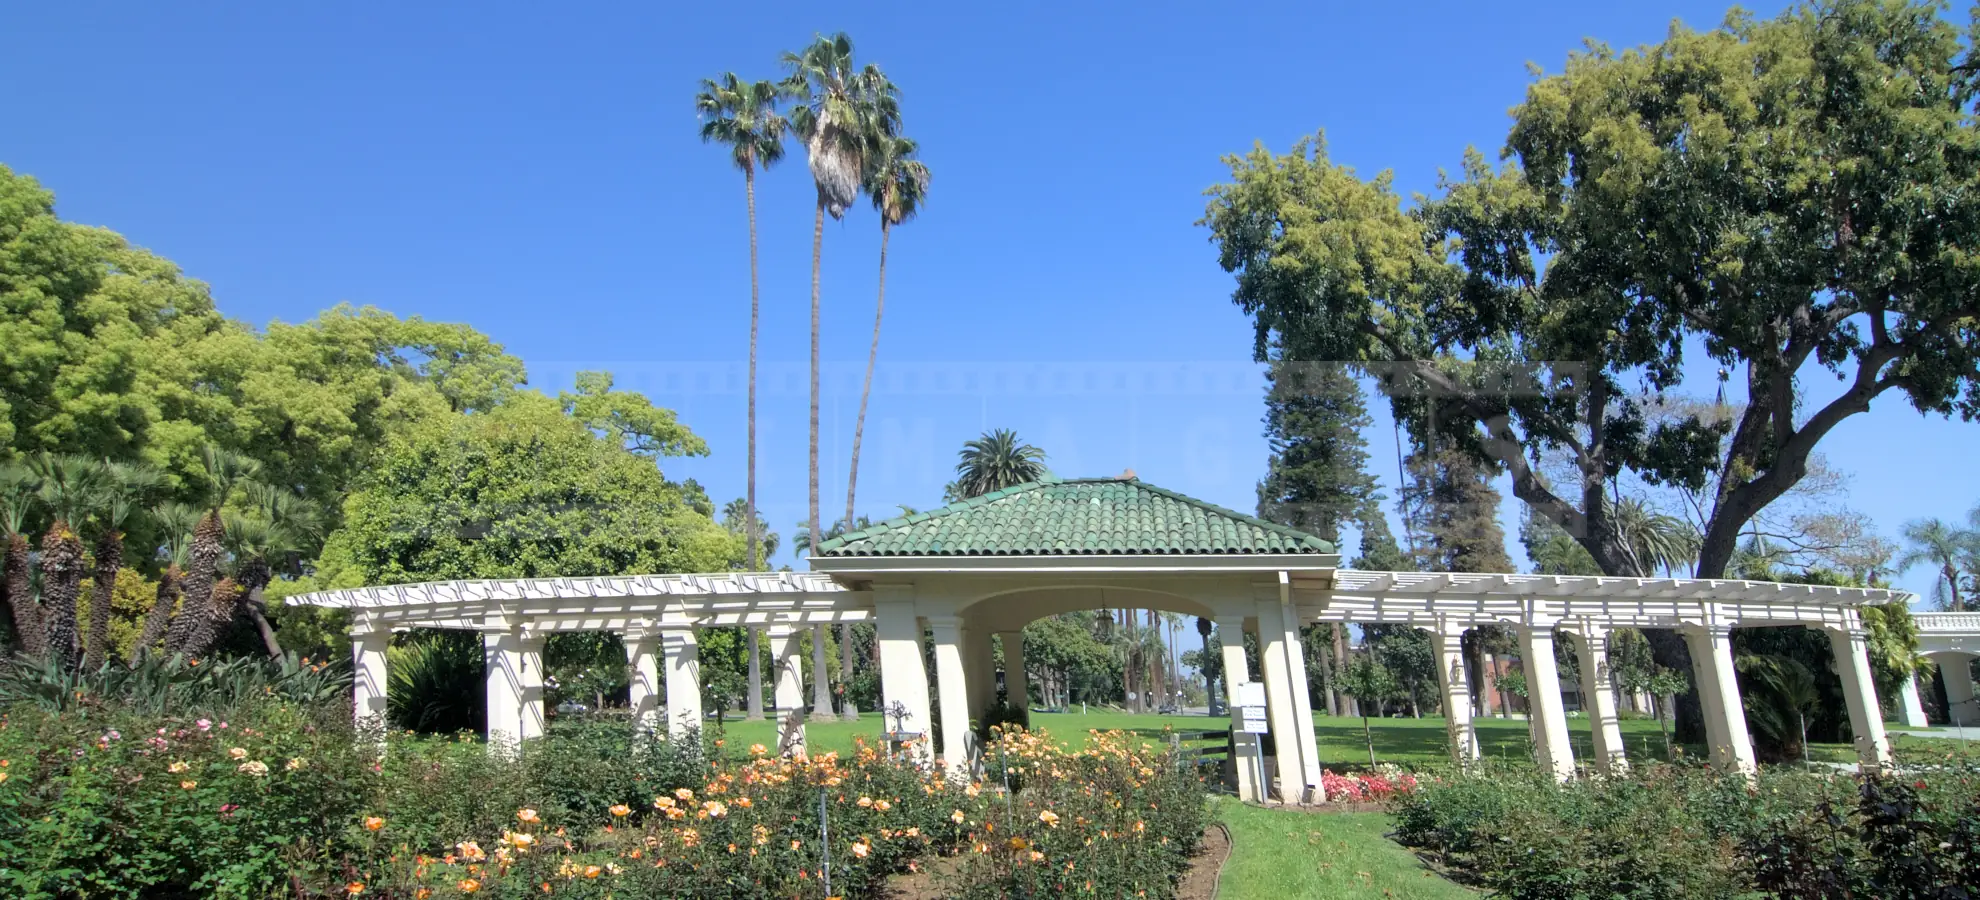 Amazing rose garden at Wrigley house in Pasadena